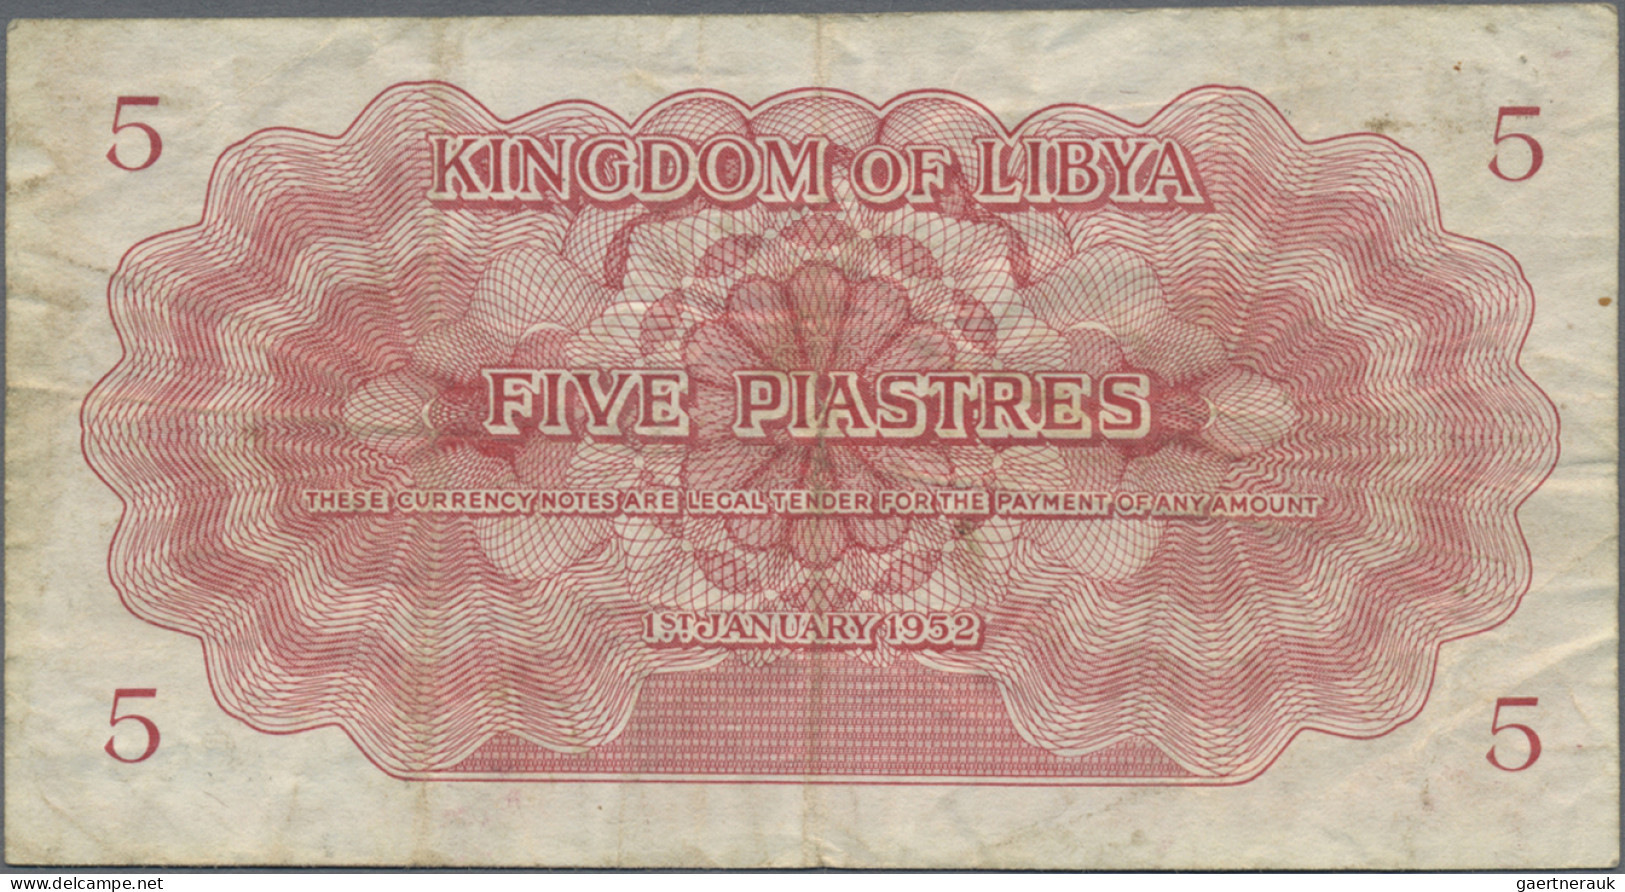 Libya: Kingdom And United Kingdom Of Libya, Nice Set With 3 Banknotes, 1950-1952 - Libya